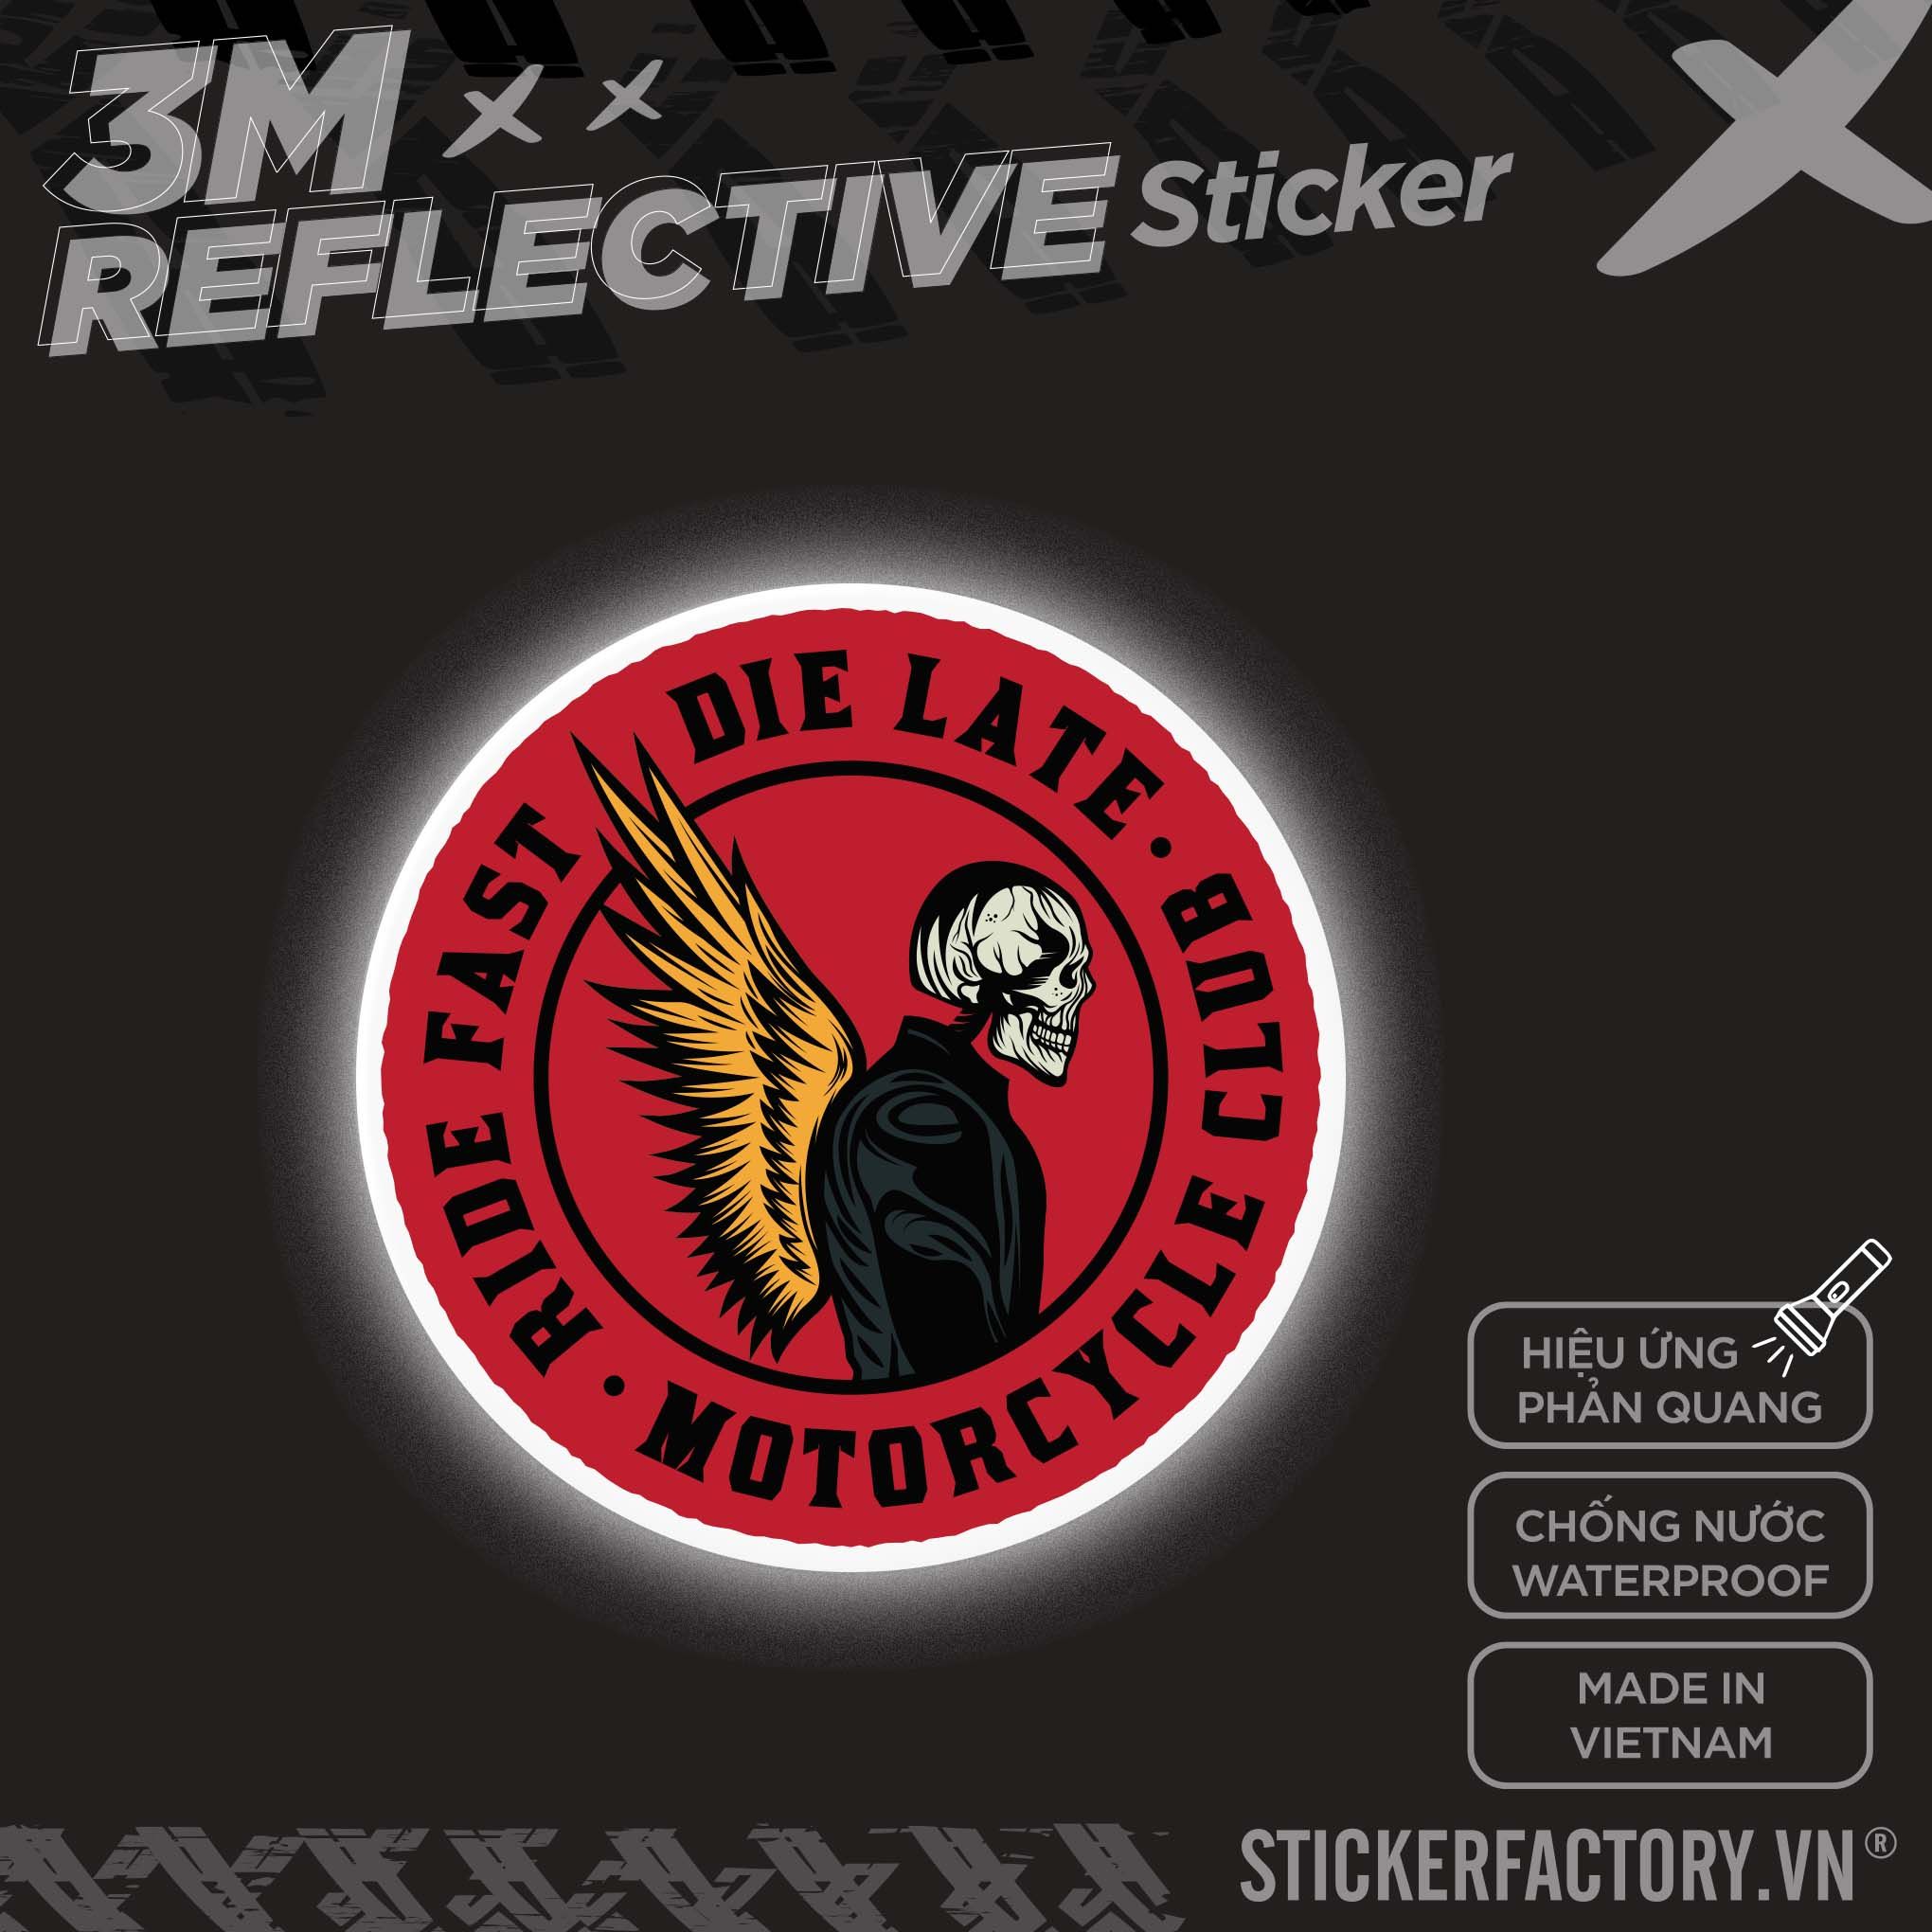 RIDE FAST DIE LATE MOTORCYCLE LOGO 3M - Reflective Sticker Die-cut